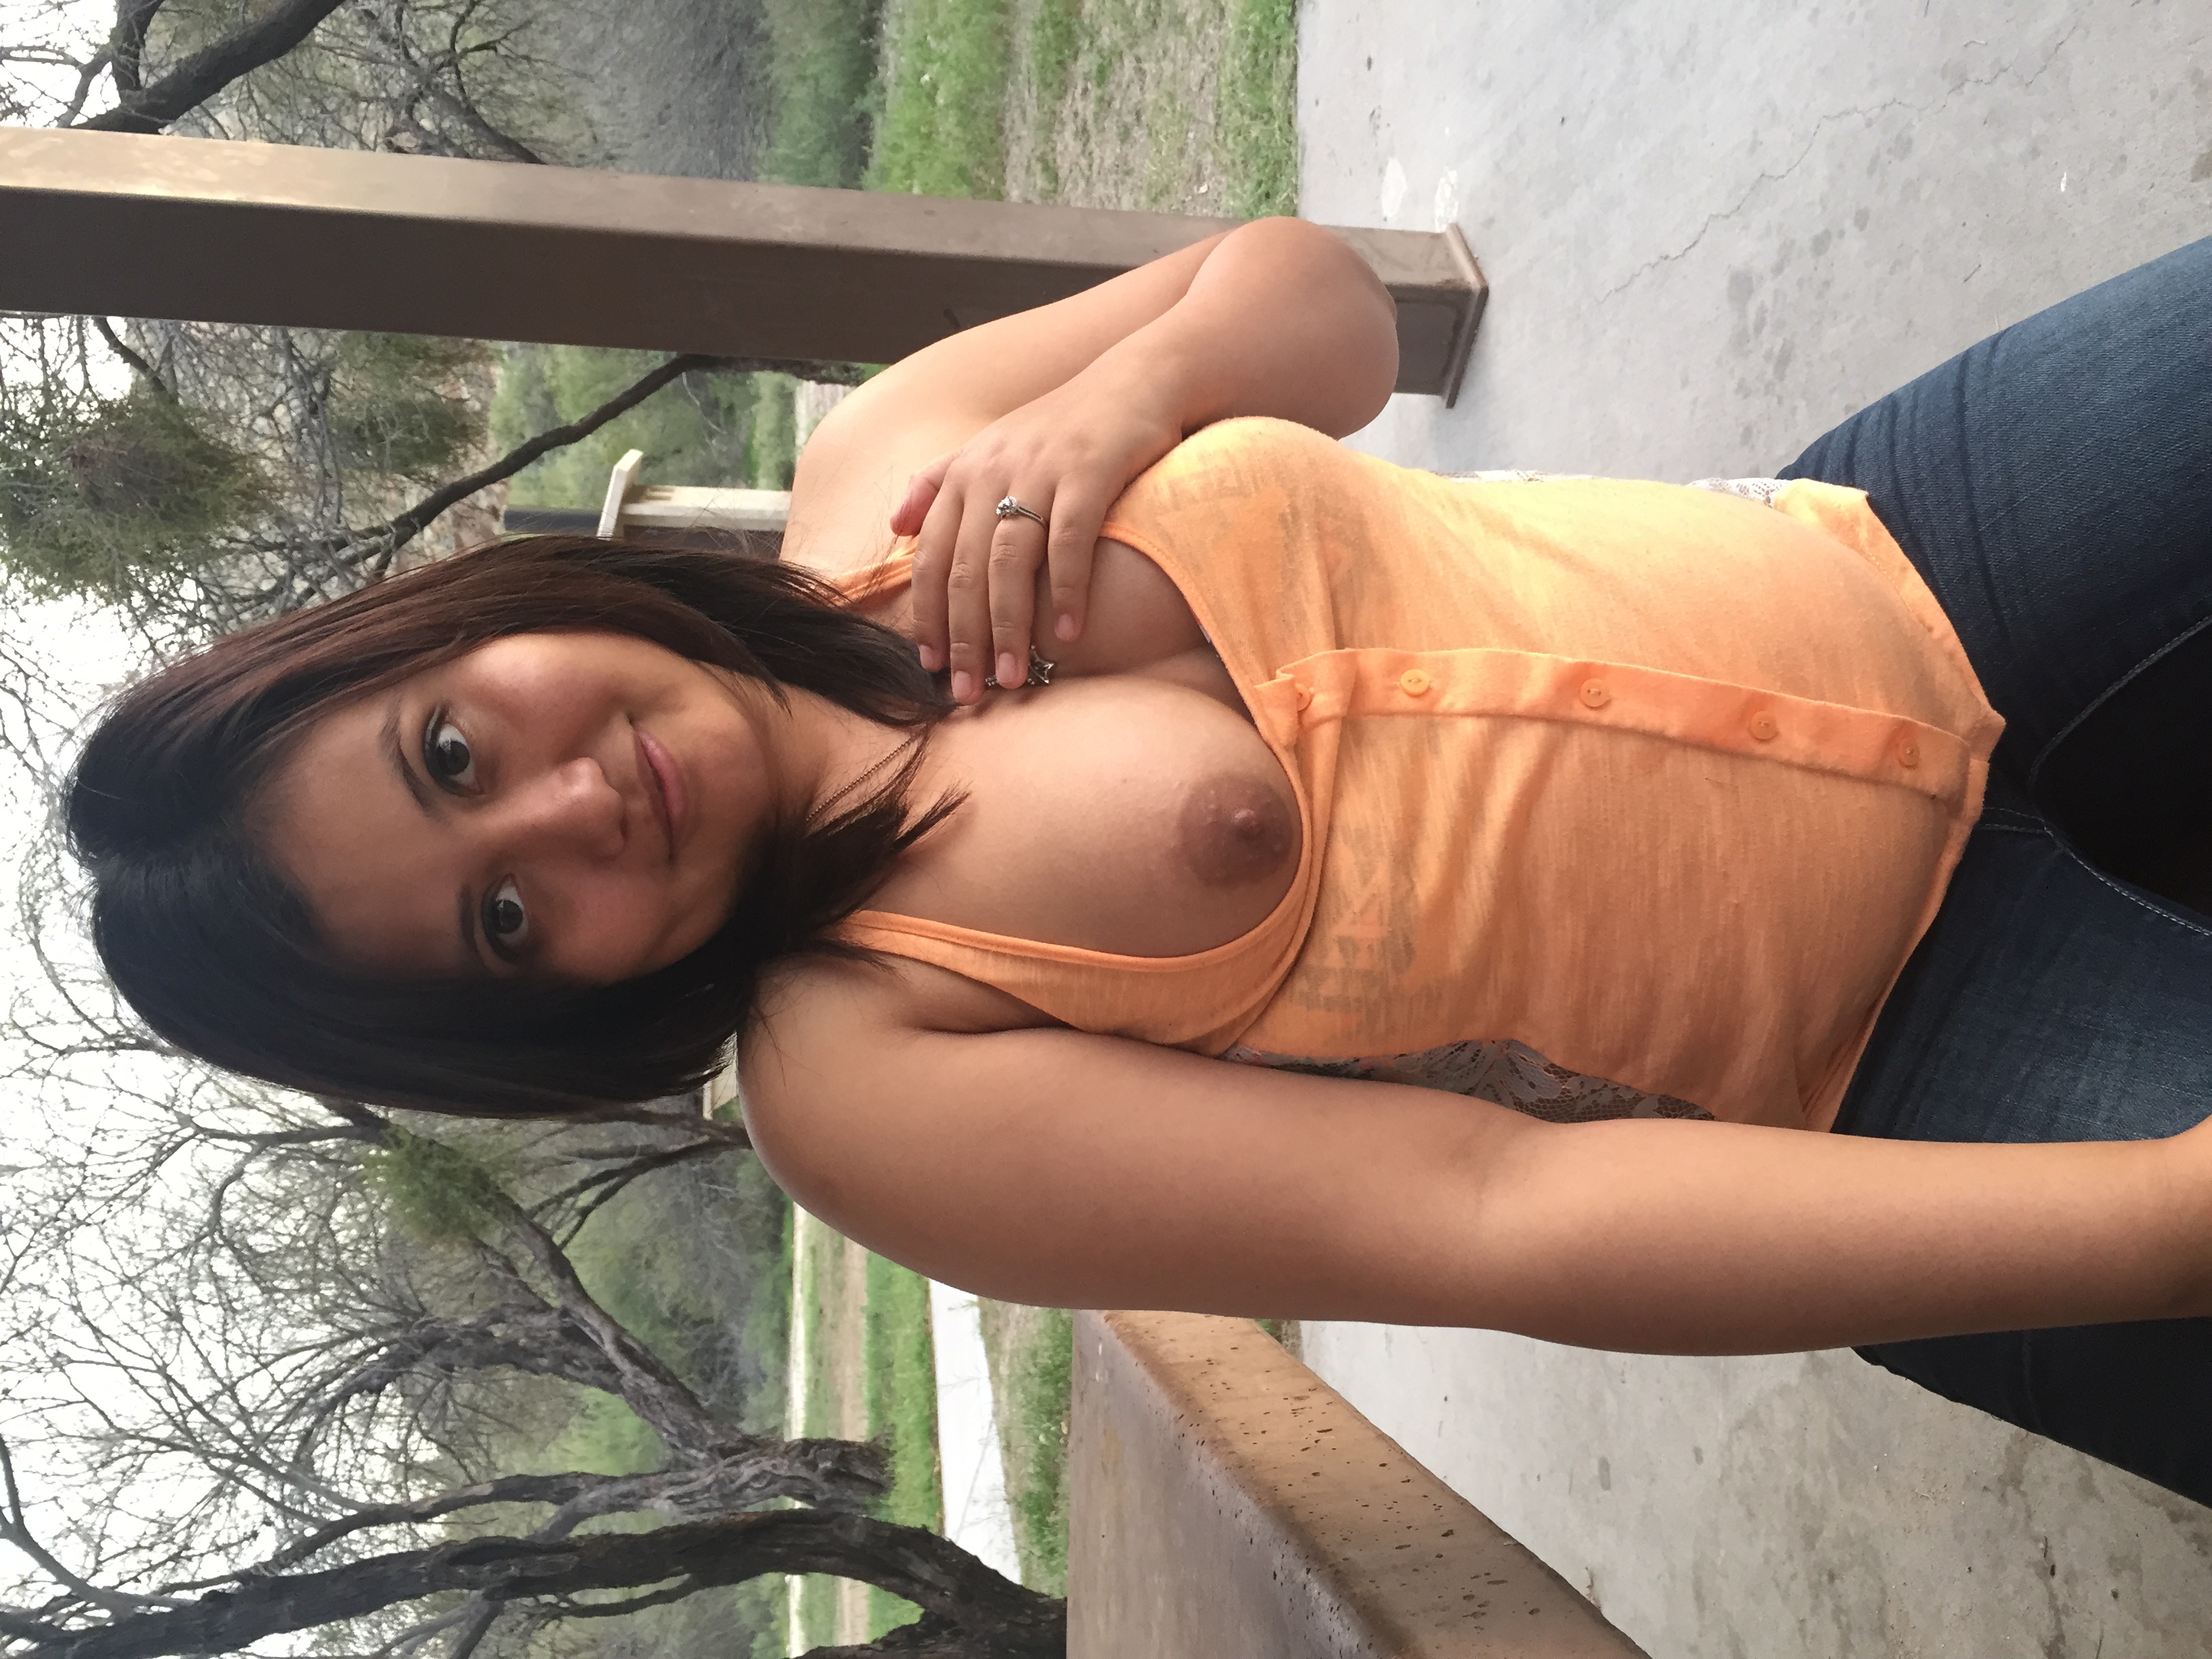 Arizona Webslut Yuleymi, 26